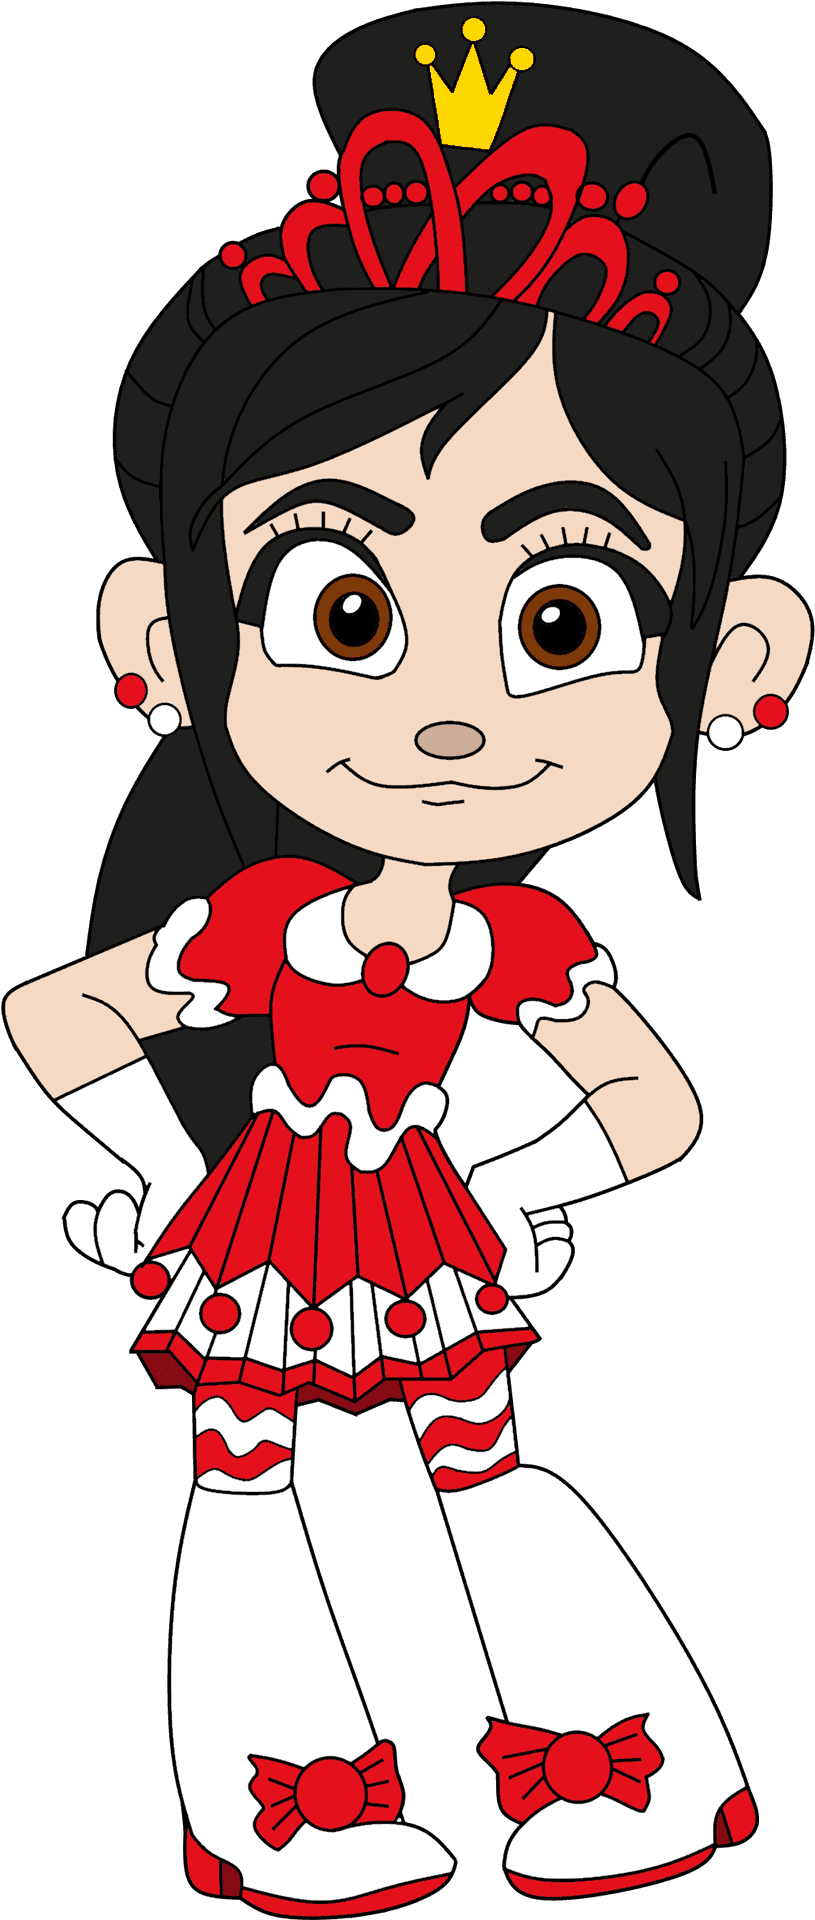 Animated Princess Character PNG image